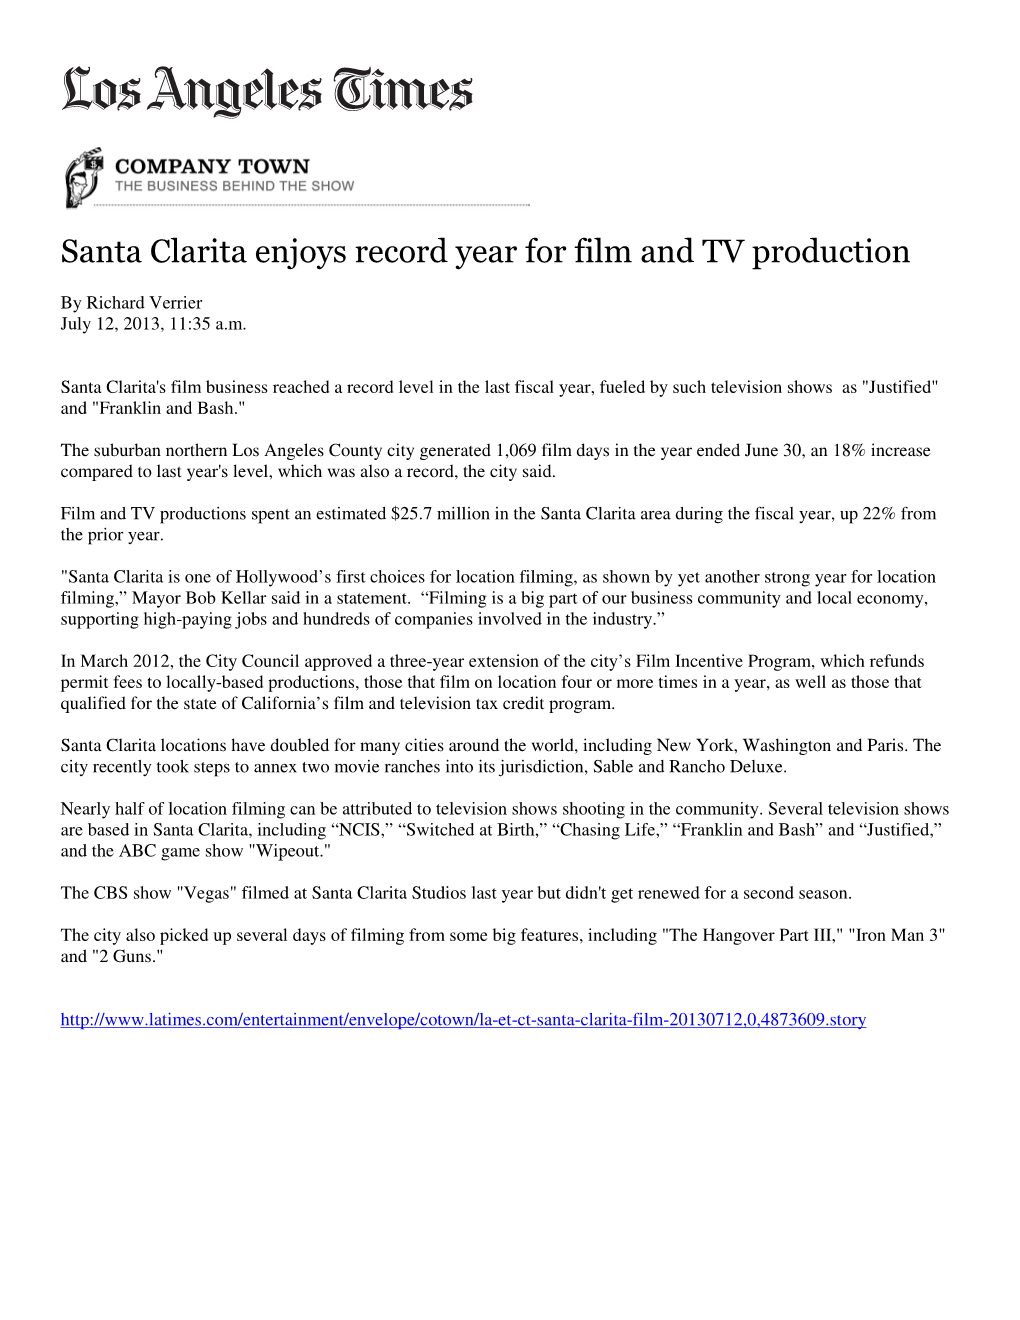 Santa Clarita Enjoys Record Year for Film and TV Production